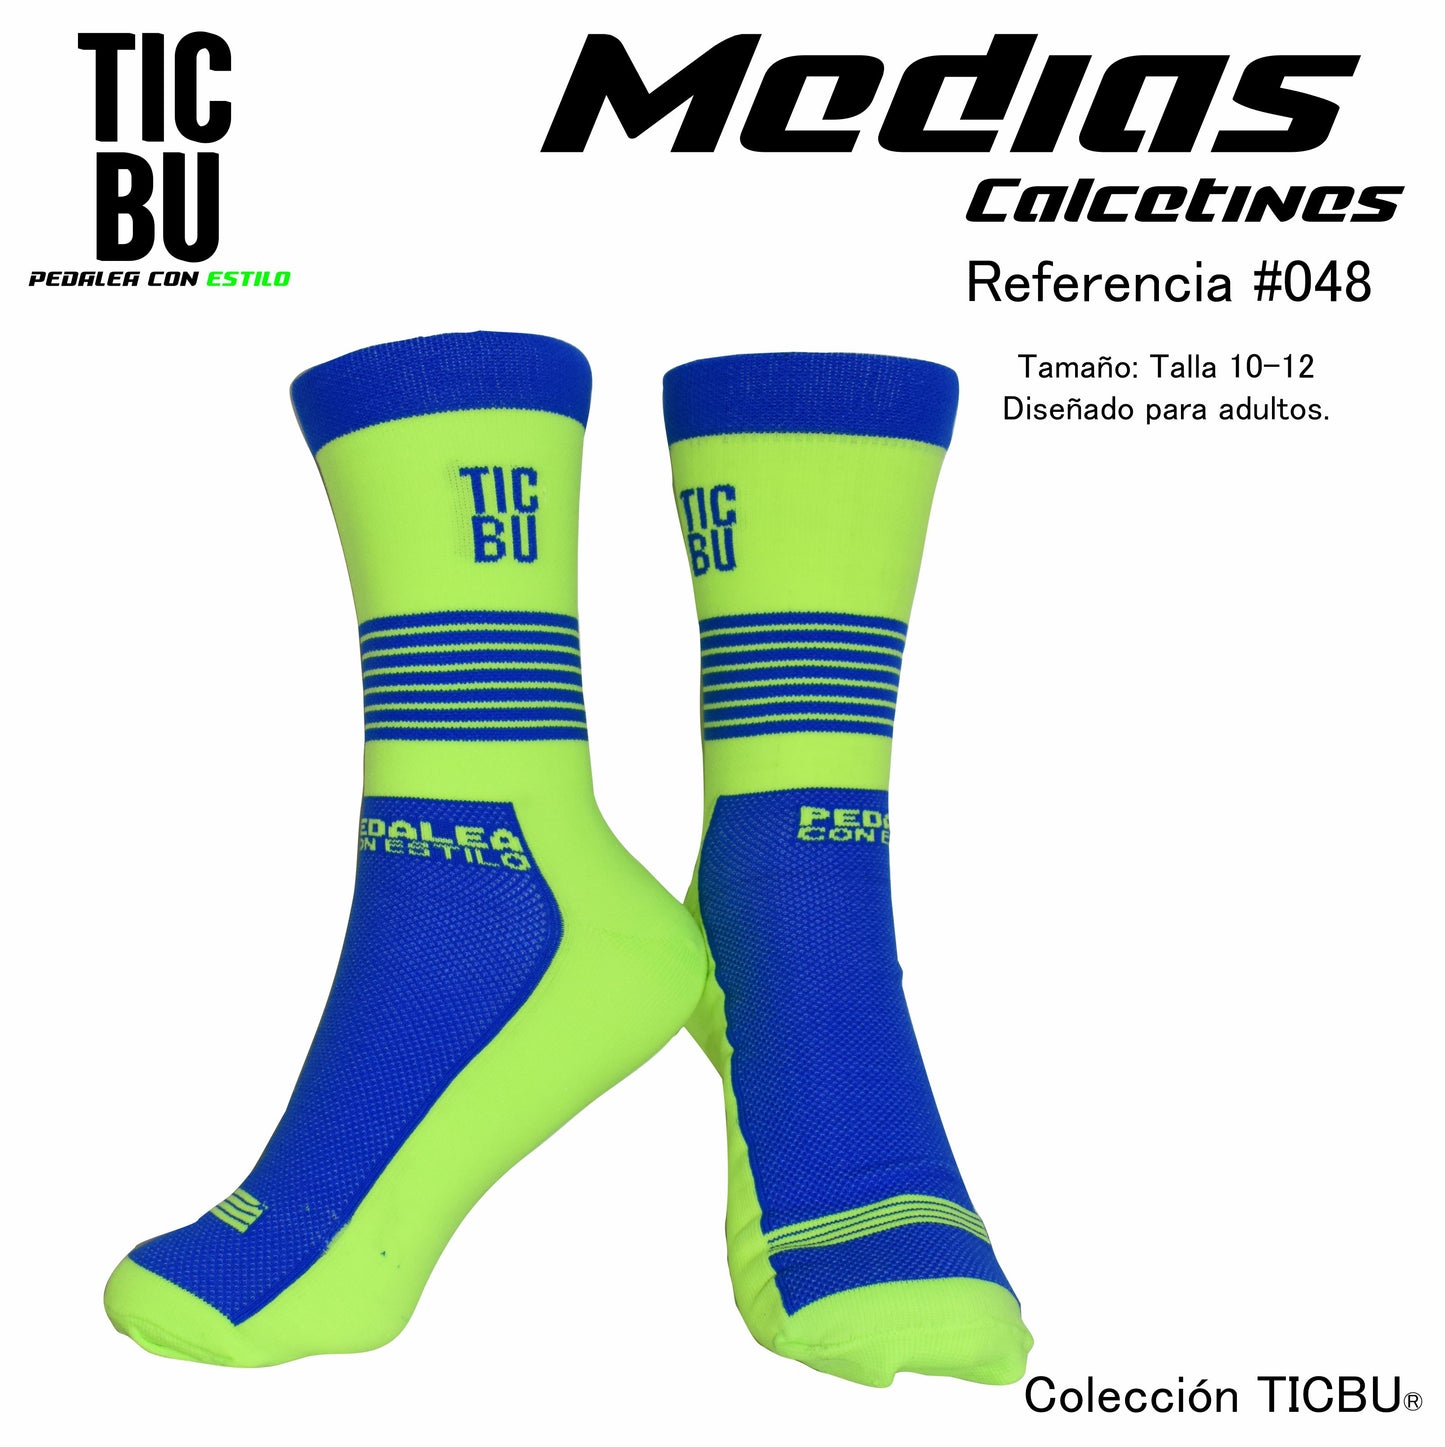 TICBU socks Ref 048